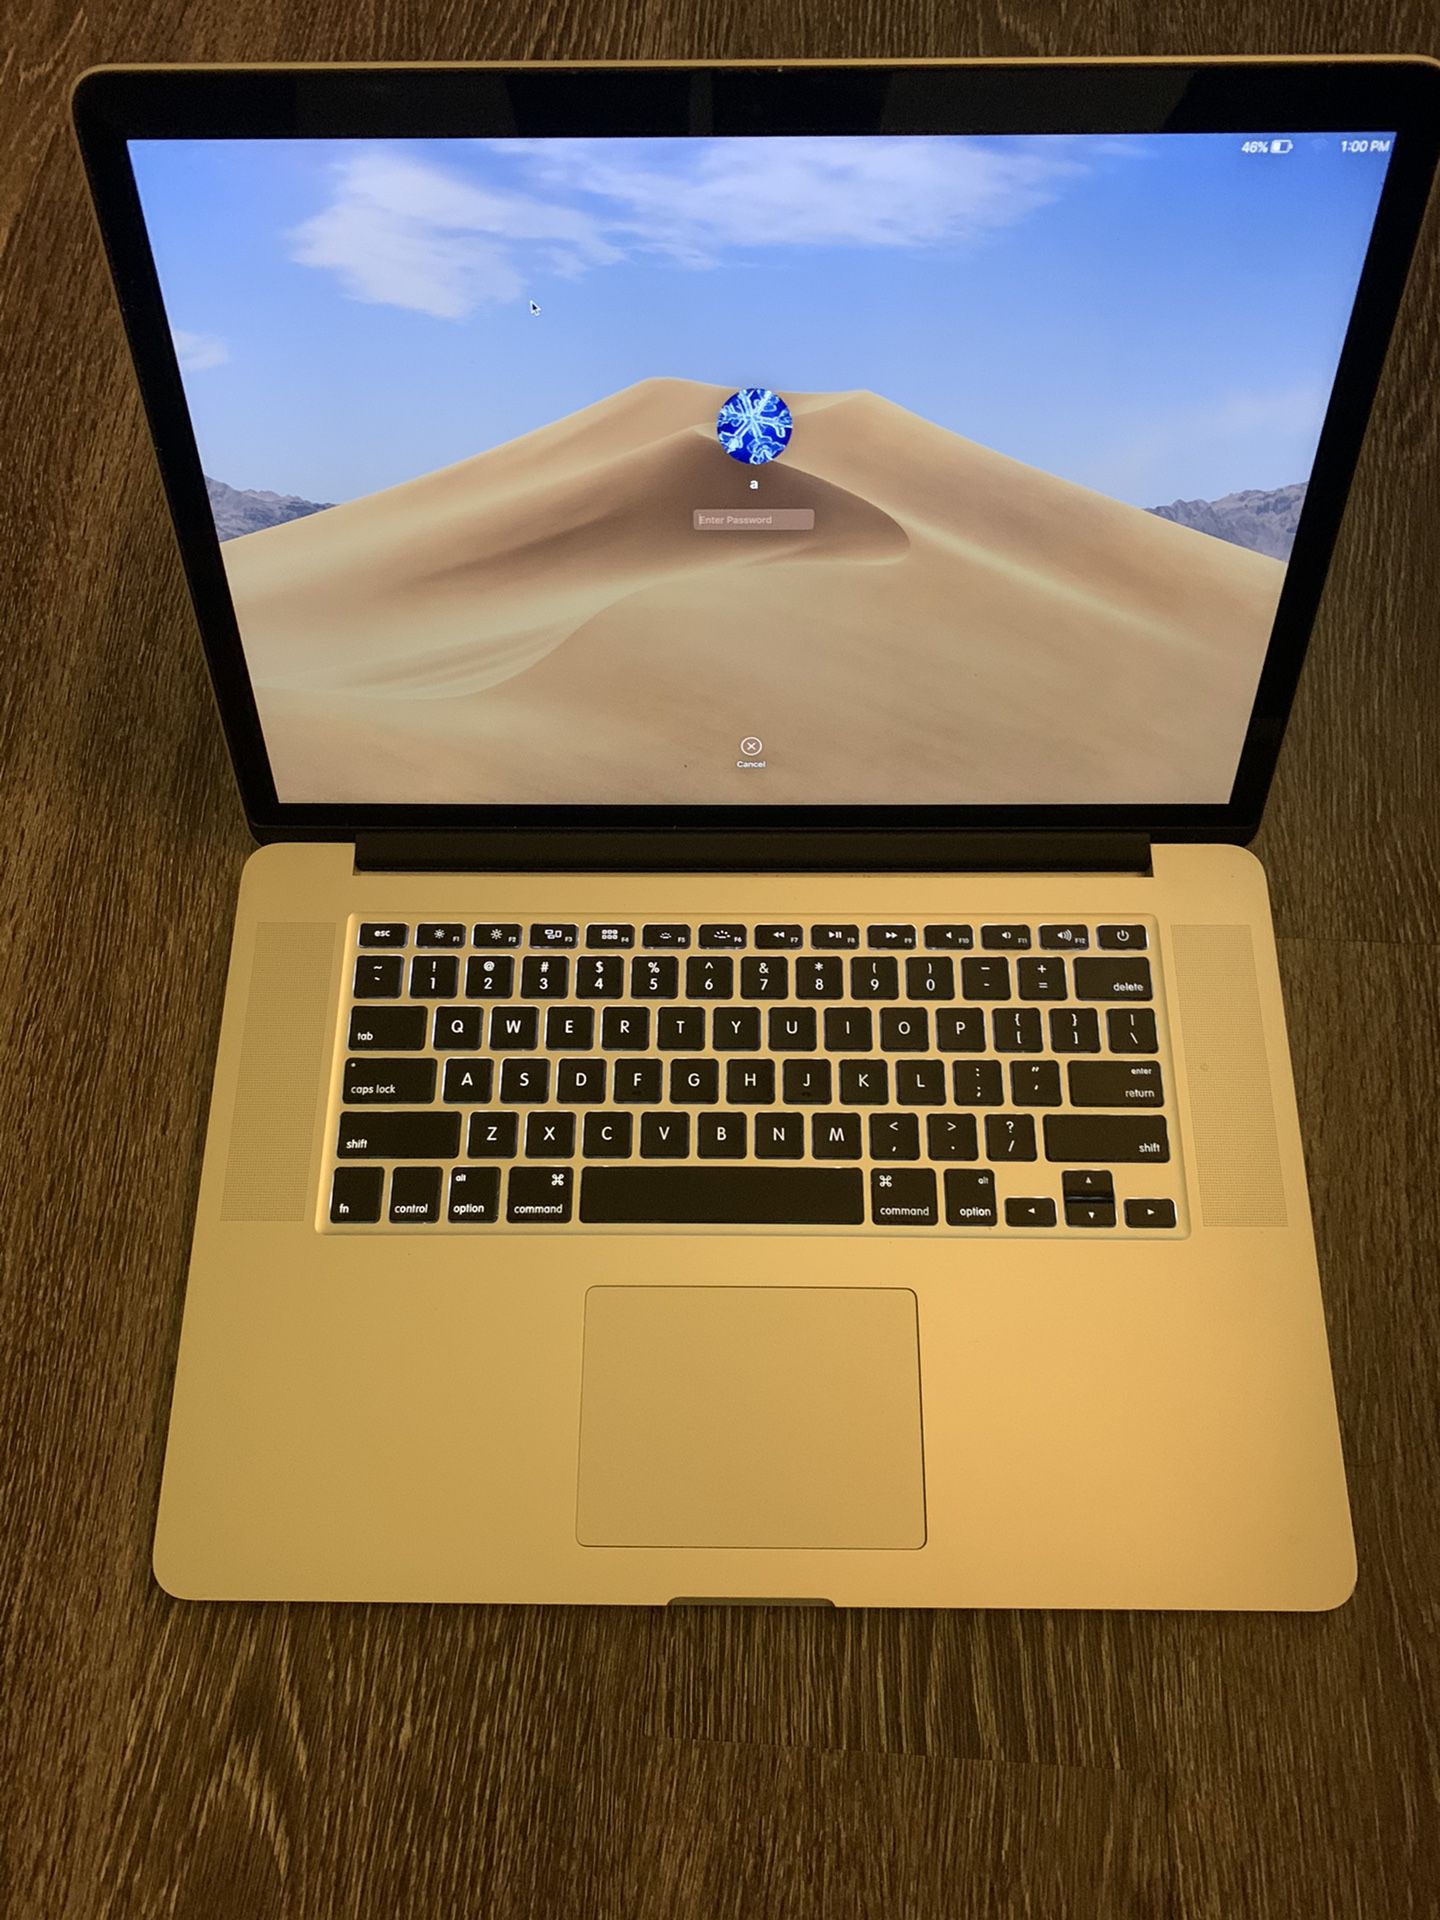 MacBook Pro 15” inch (Late 2013)